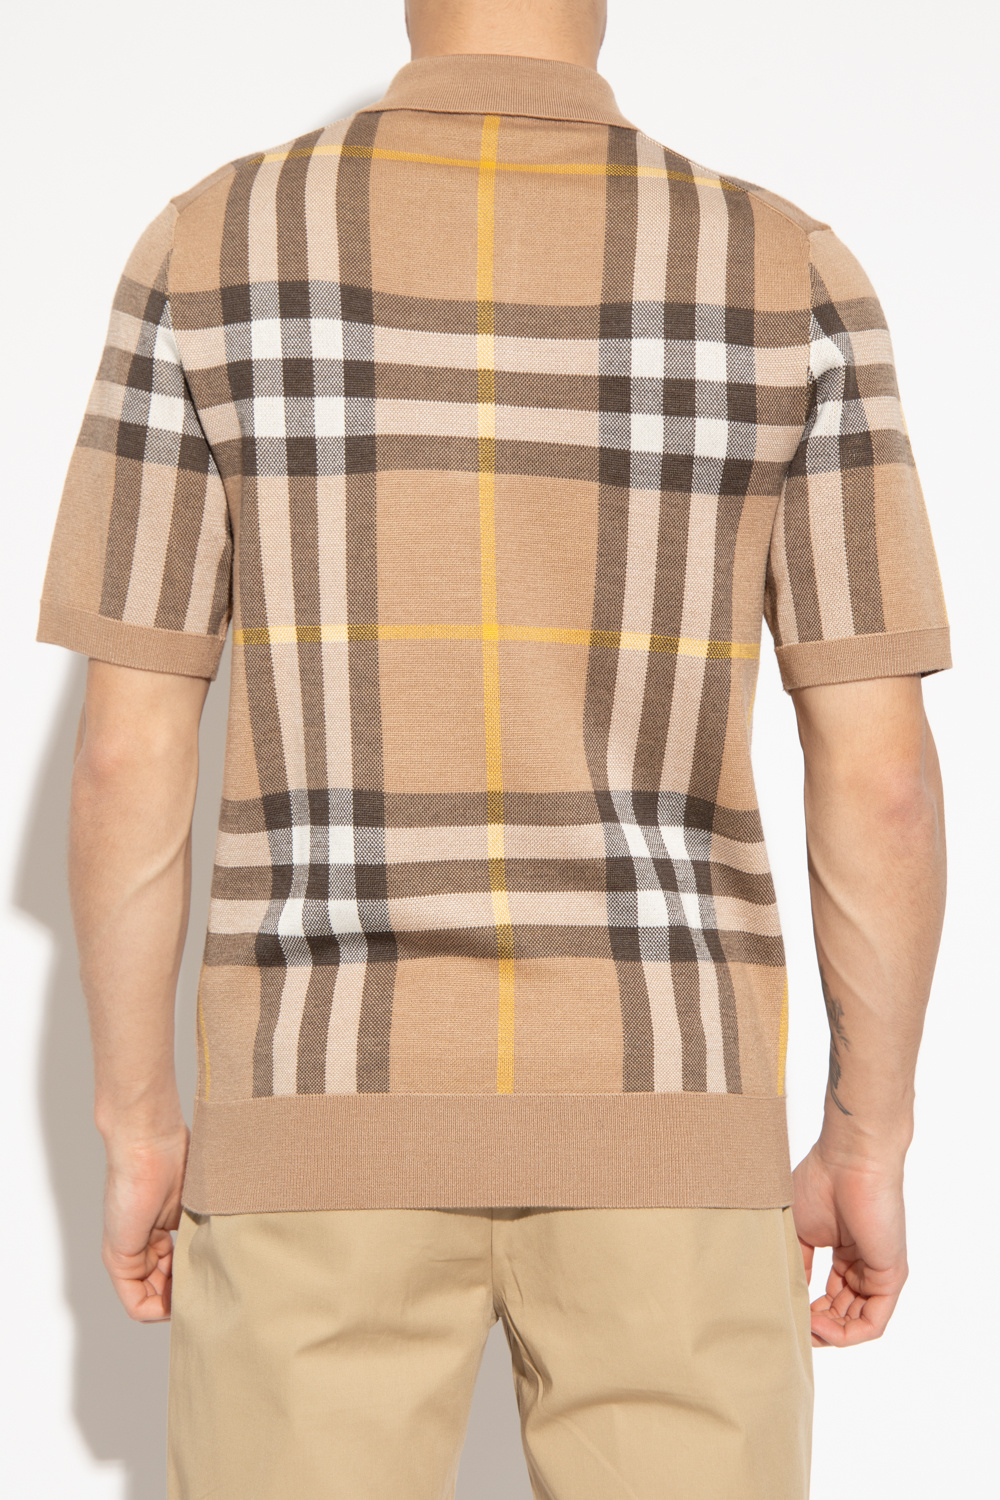 Burberry ‘Wellman’ polo shirt